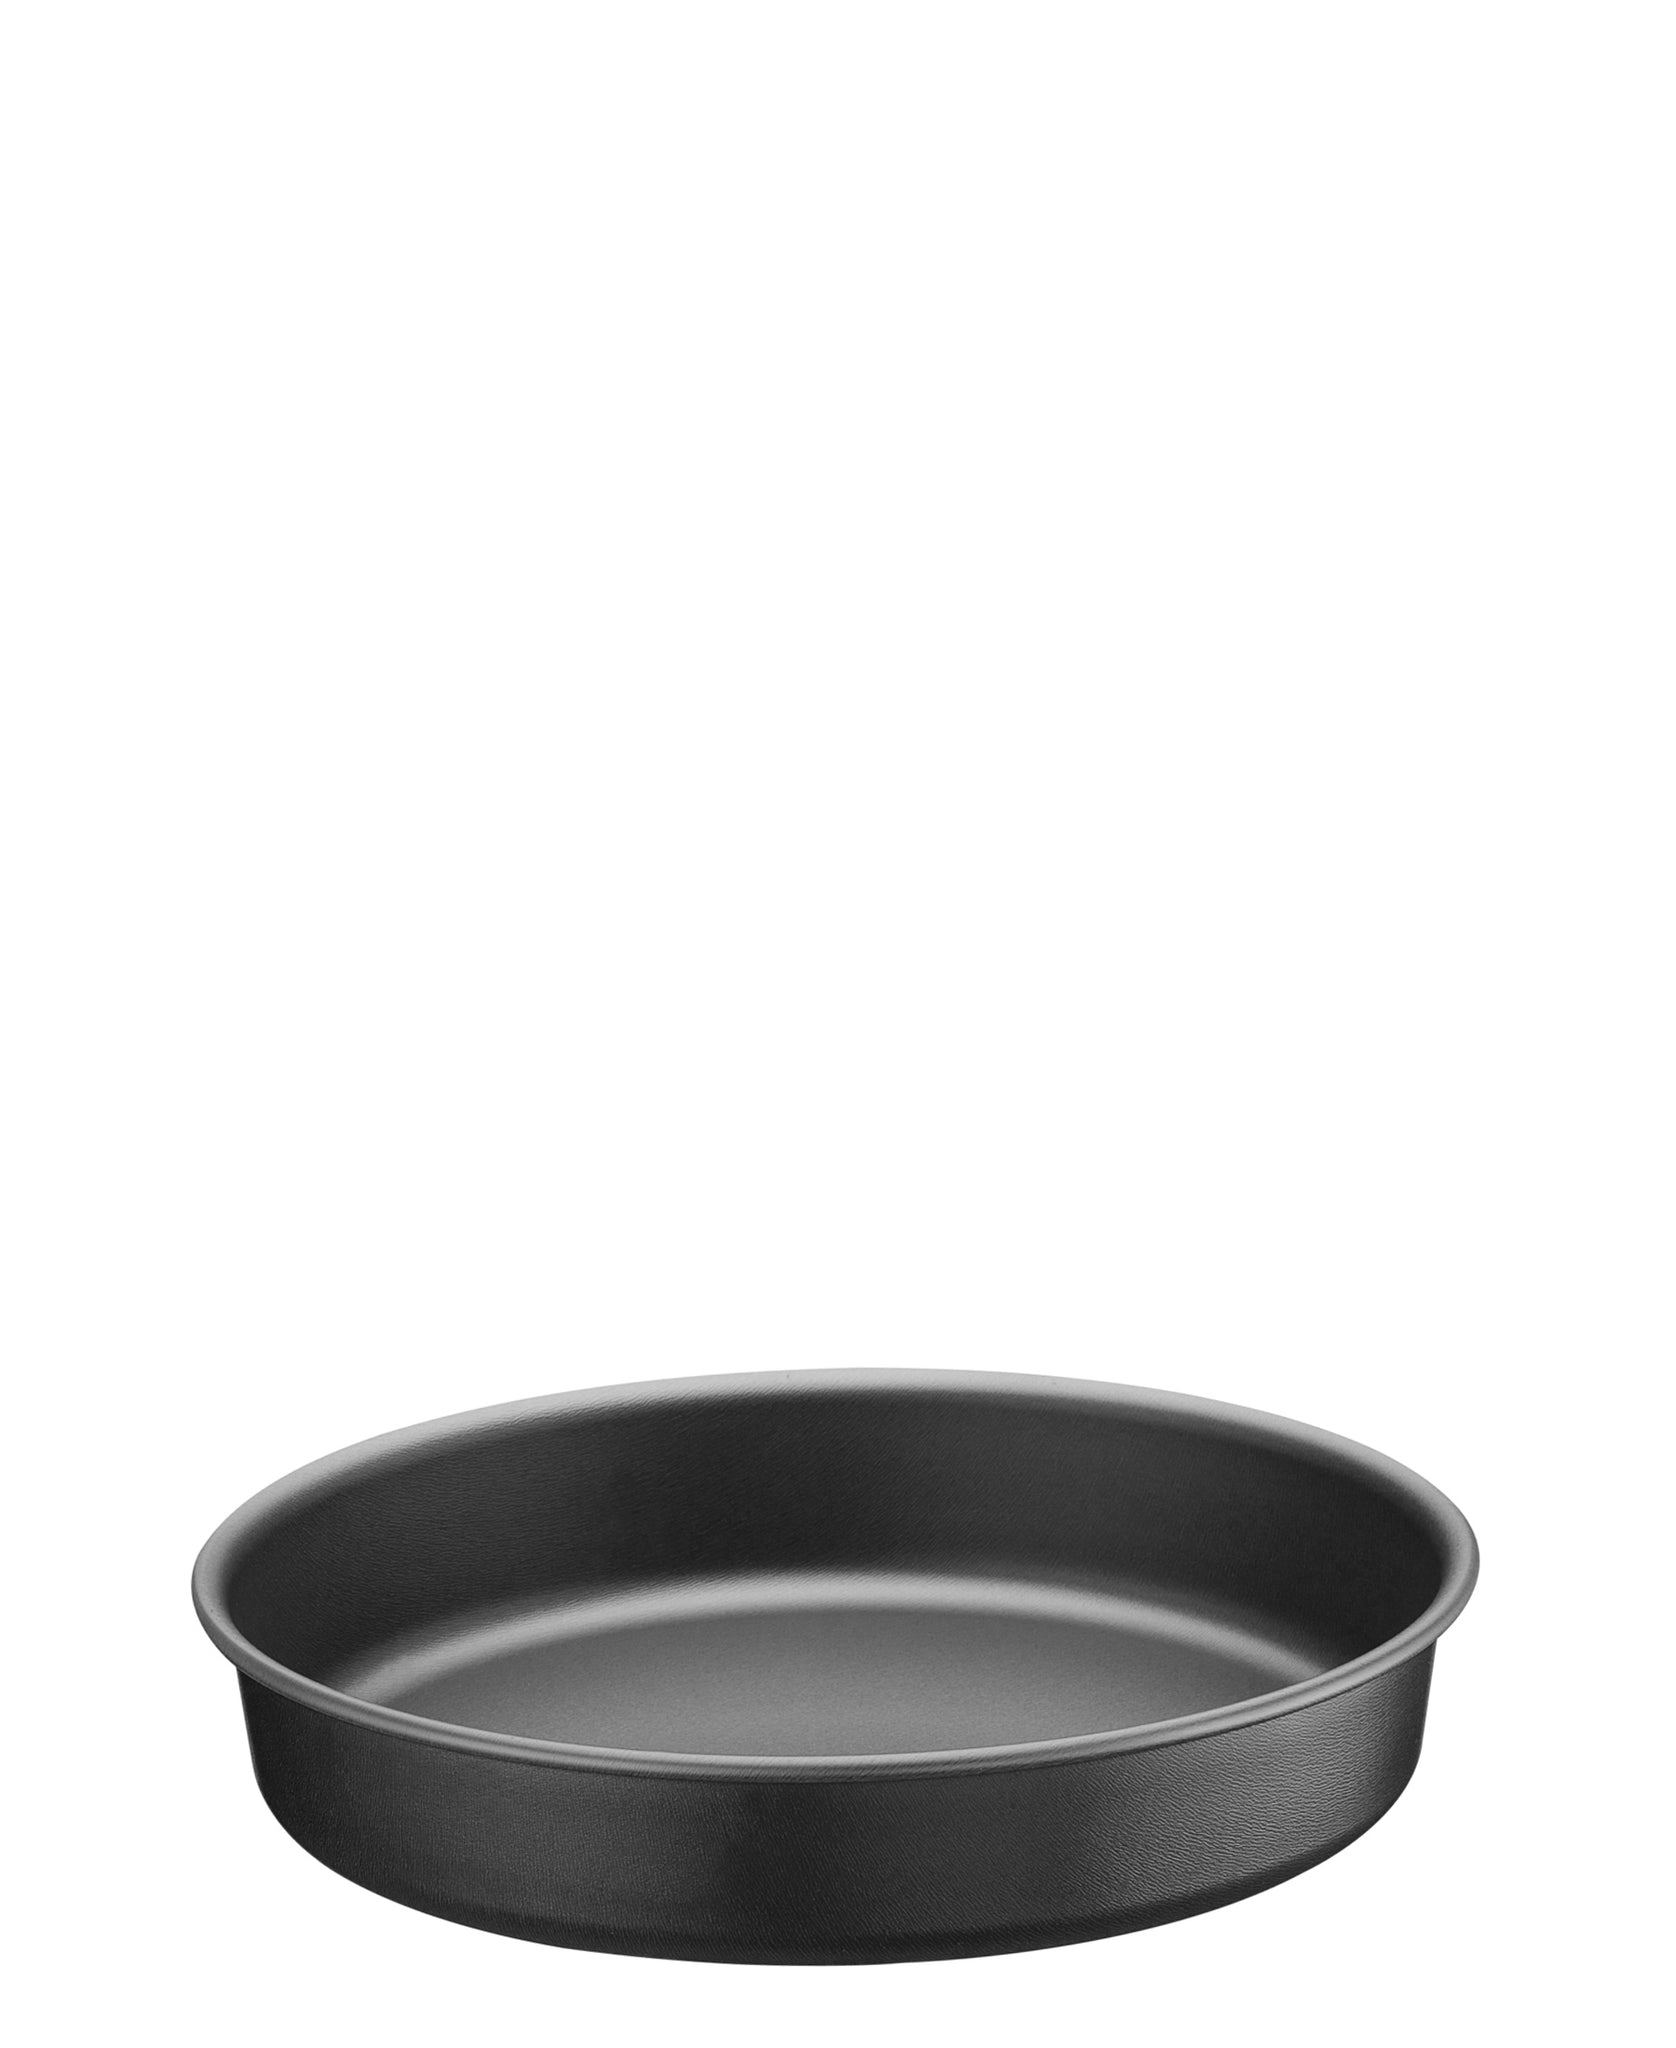 Tramontina round roasting pan with nonstick coating 24cm - Grey